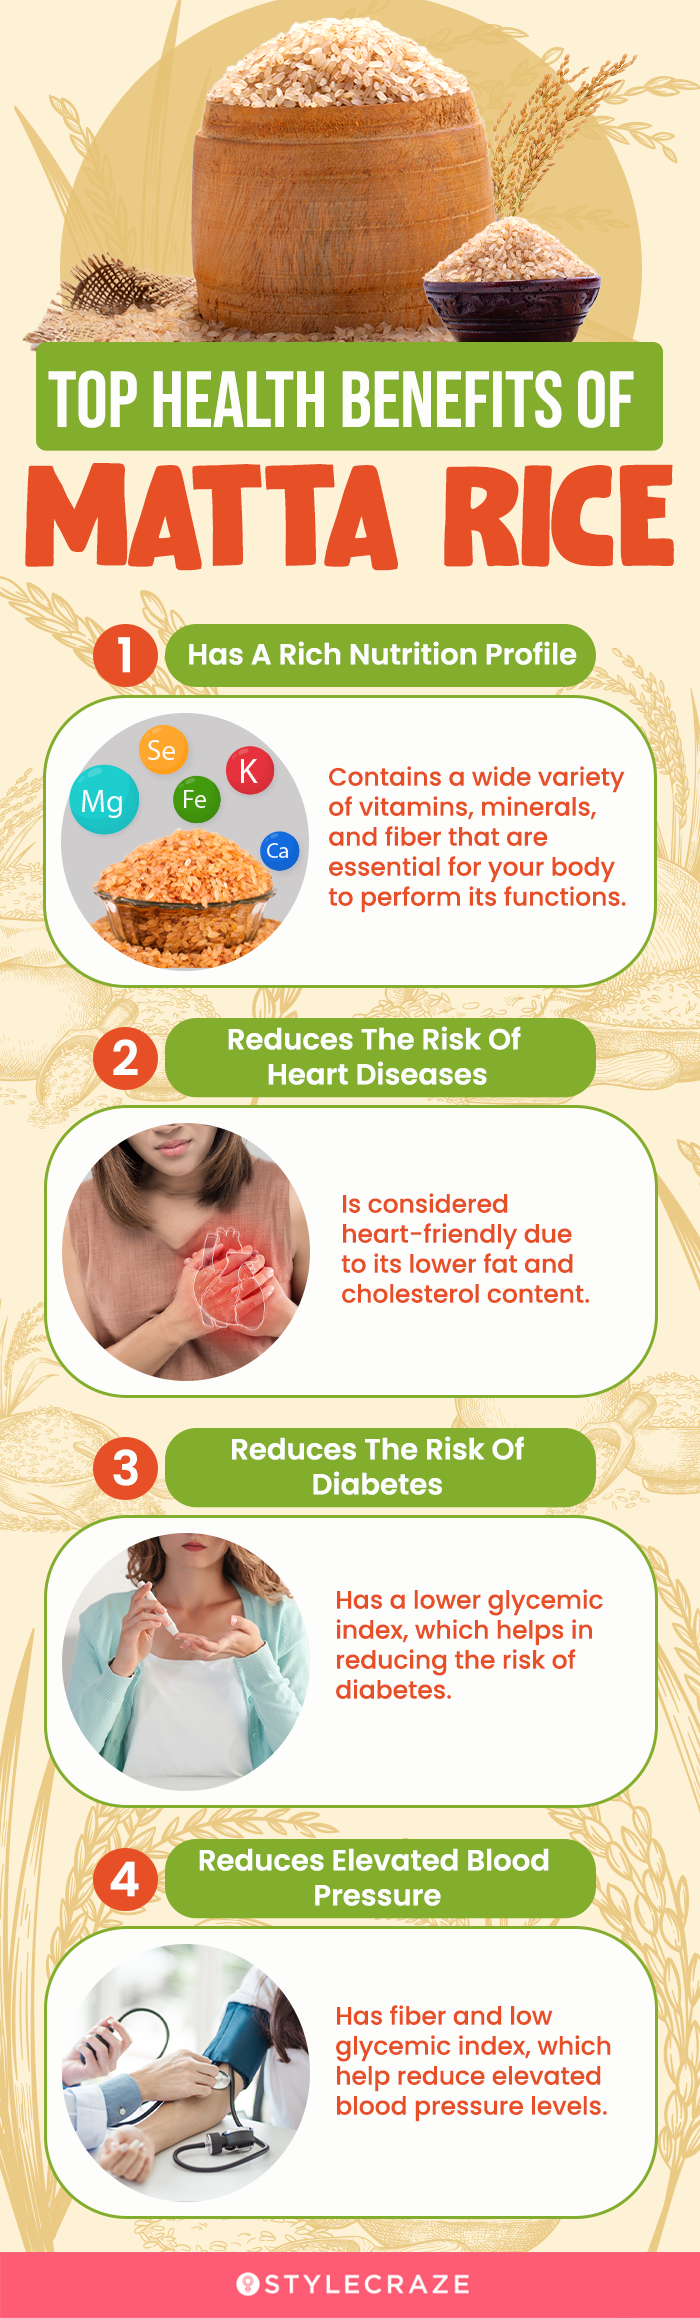 top health benefits of matta rice [infographic]